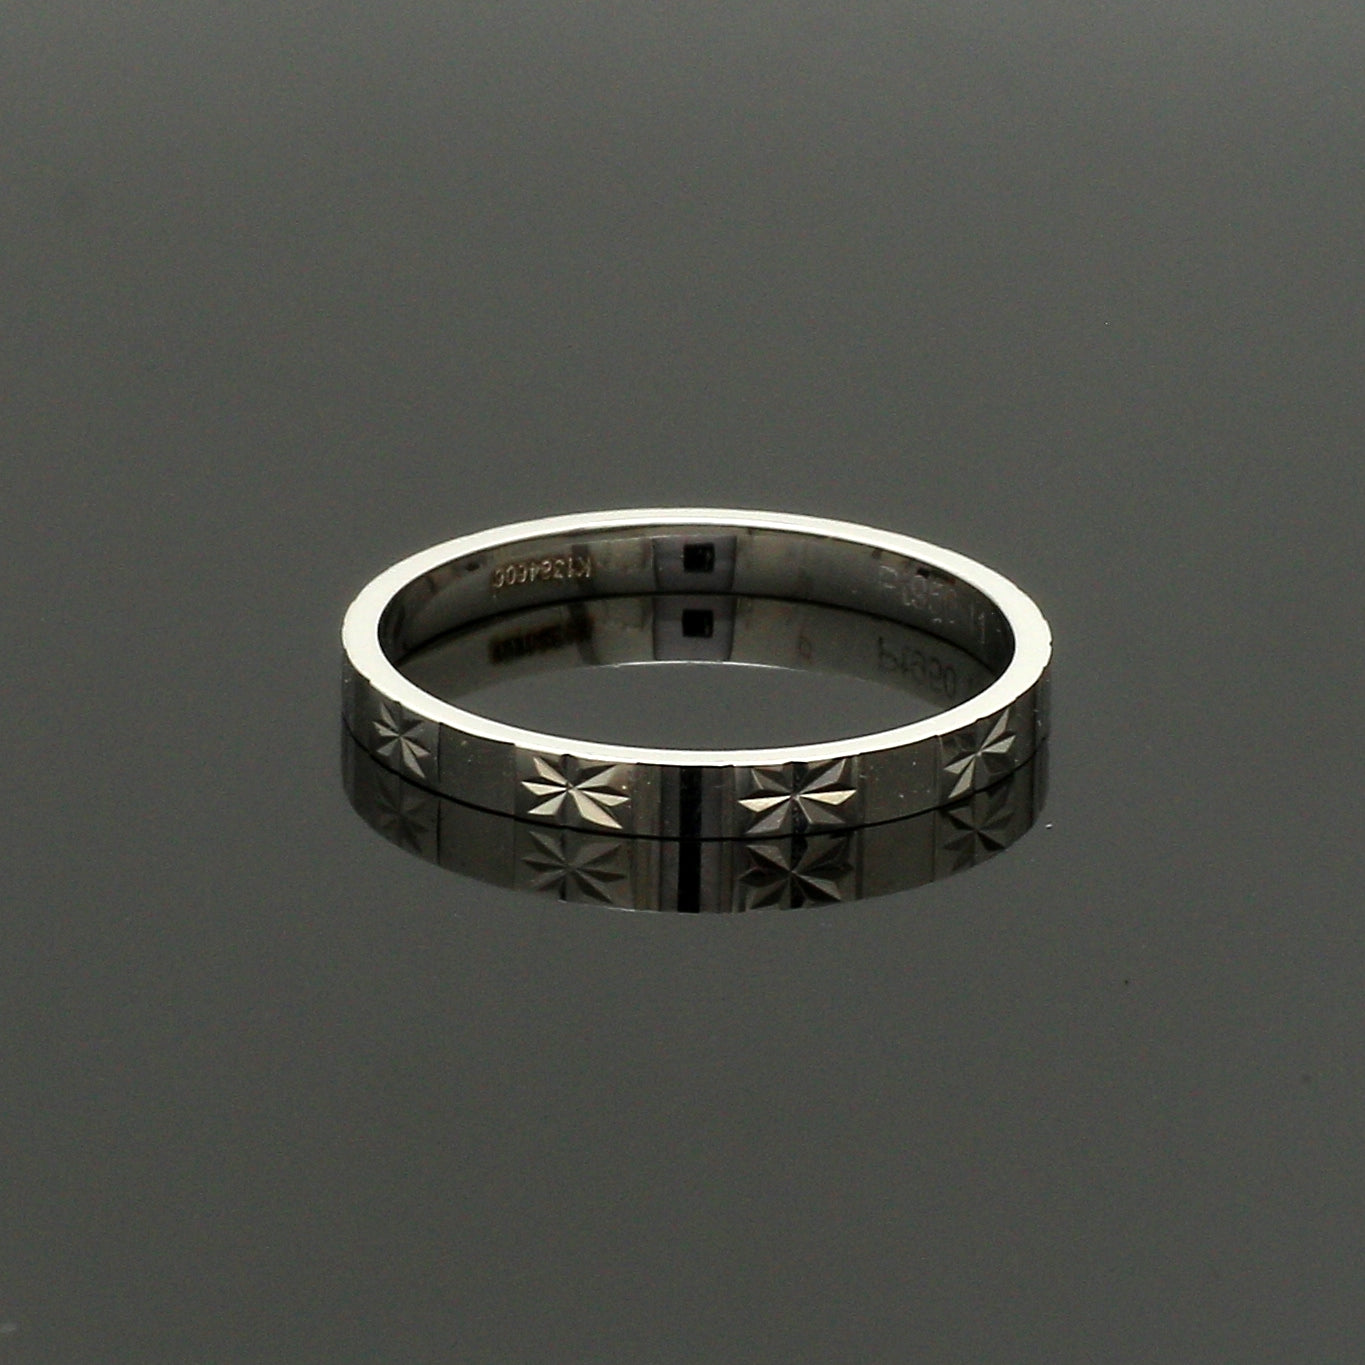 2mm Designer Japanese Platinum Women's Ring JL PT 1343   Jewelove